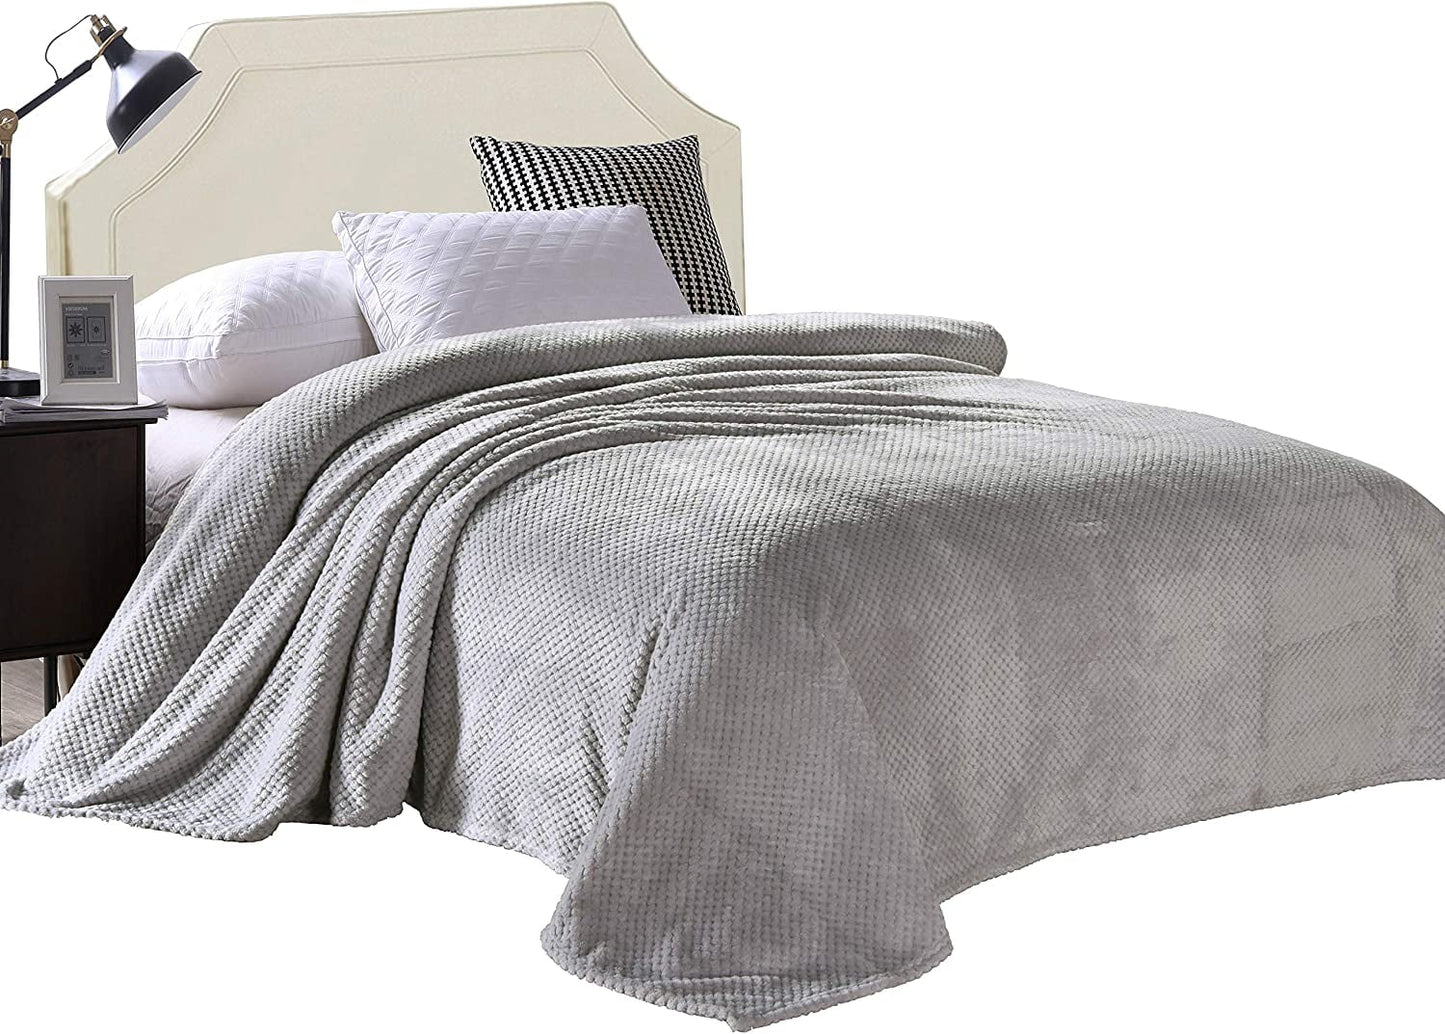 Exclusivo Mezcla Waffle Textured Soft Fleece Blanket, Queen Size Bed Blanket, Cozy Warm and Lightweight (Light Grey, 90x90 inches)